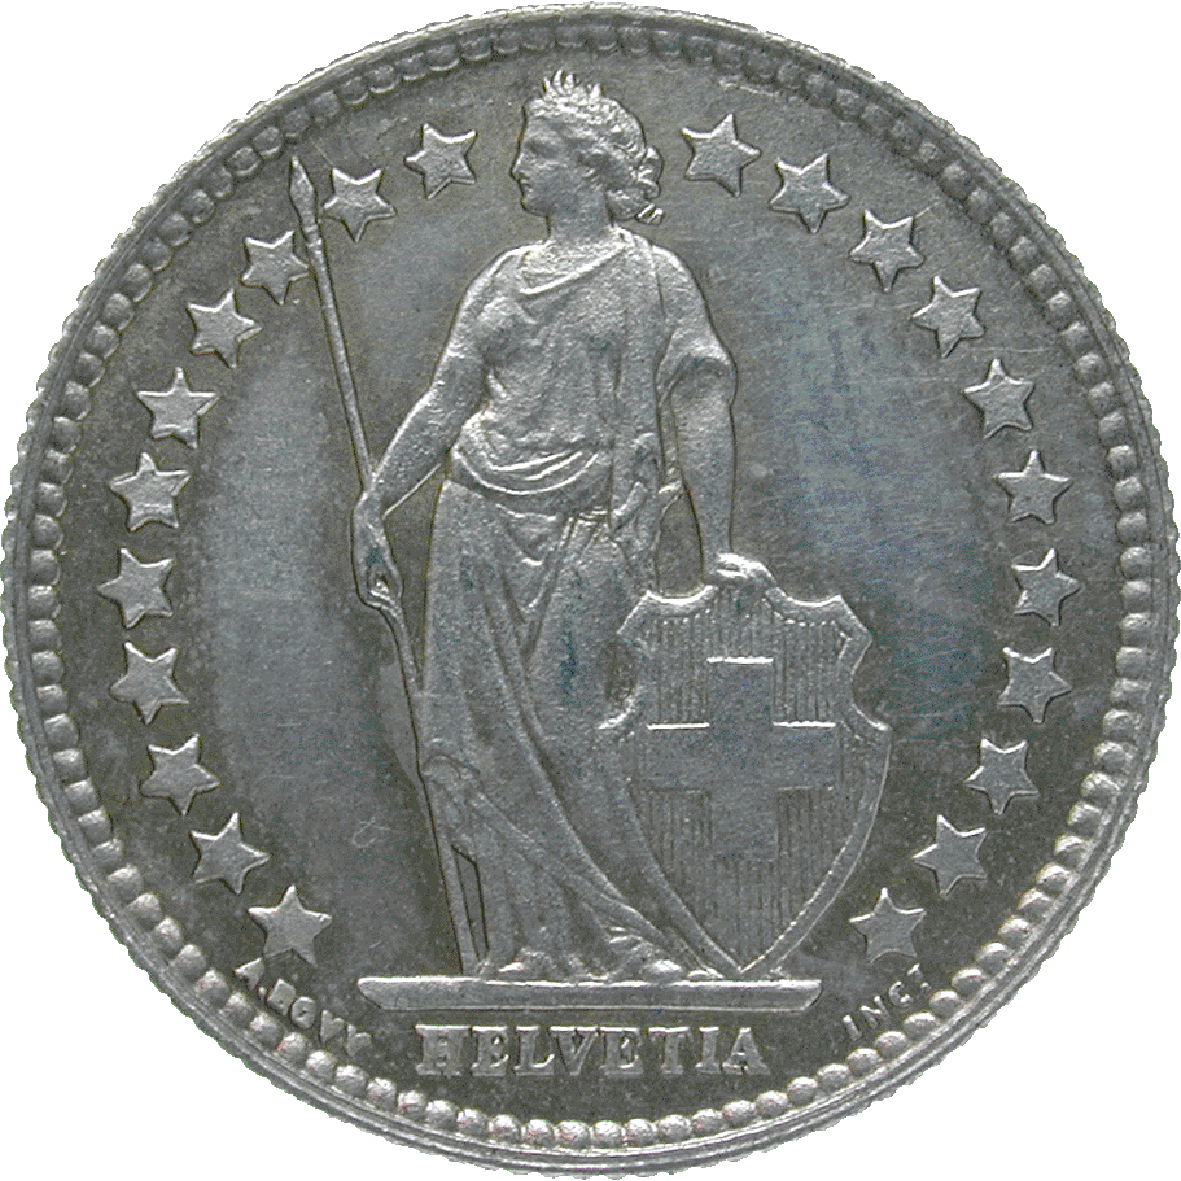 Swiss Confederation, 1/2 Franc 1875 (obverse)